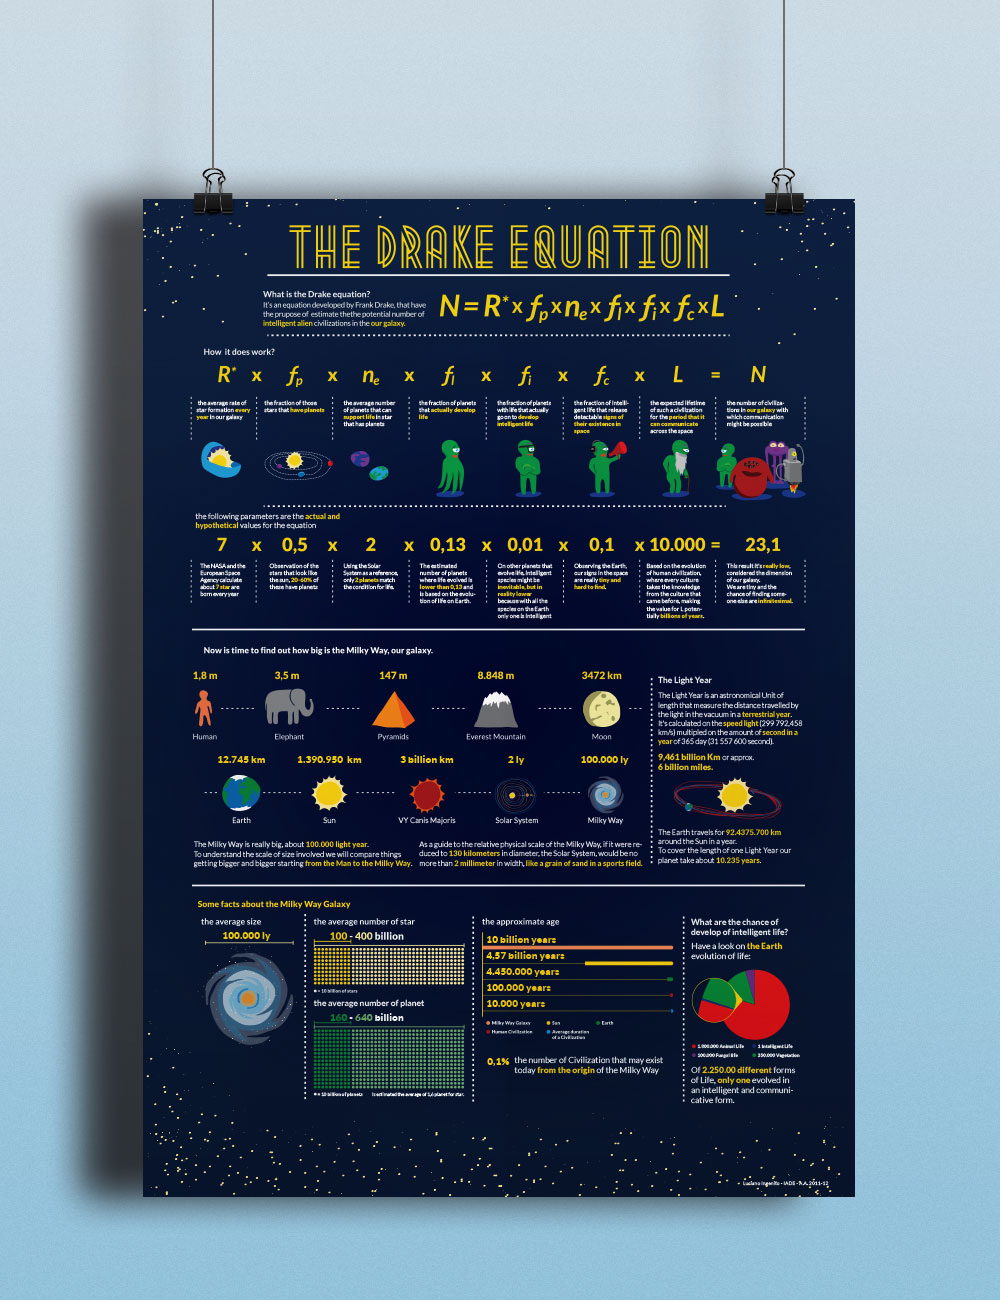 poster drake equation alien star galaxy milky way infographics